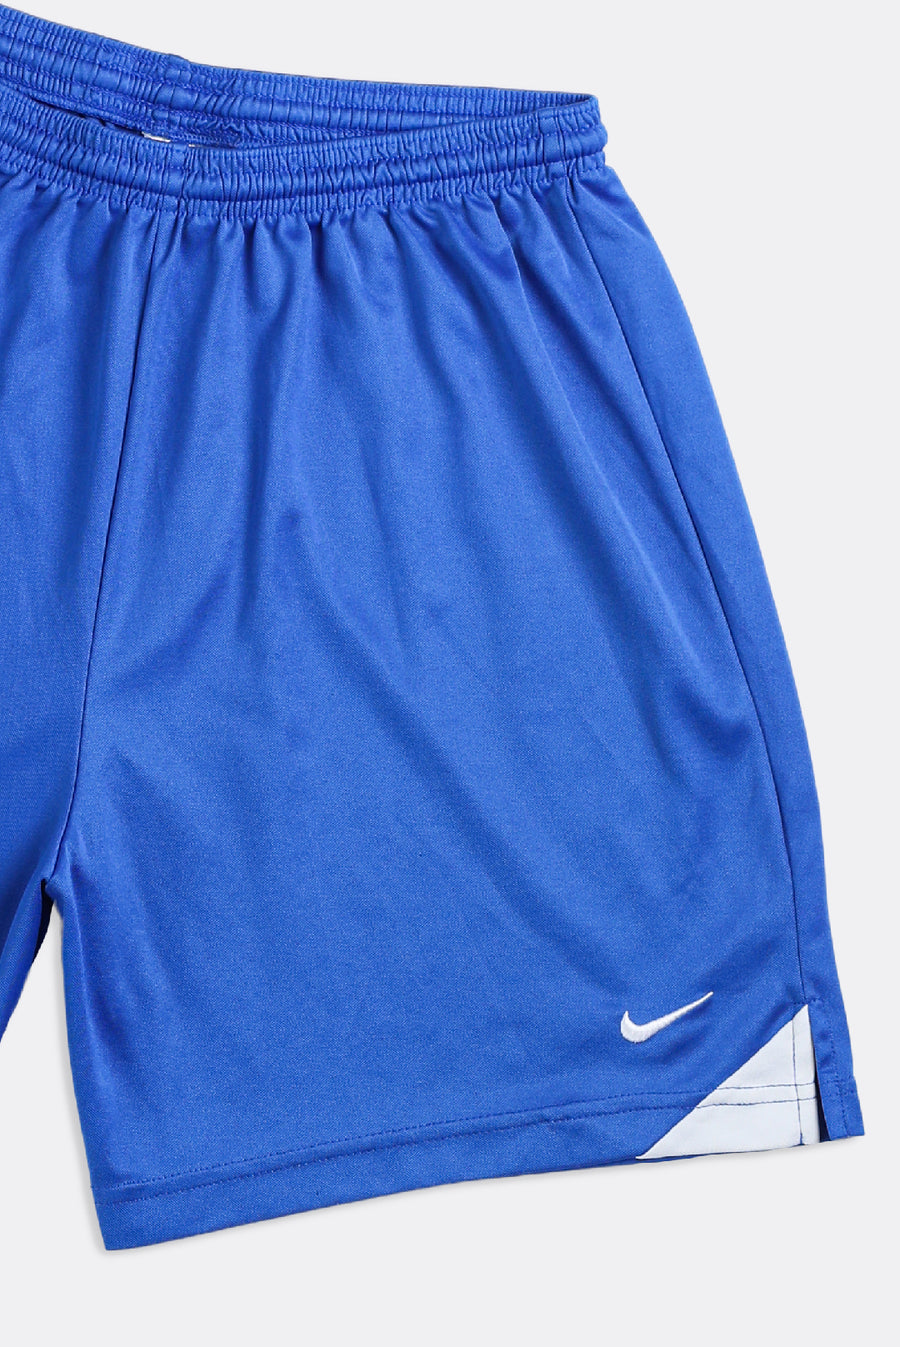 Deadstock Nike Shorts - S, M, L, XL